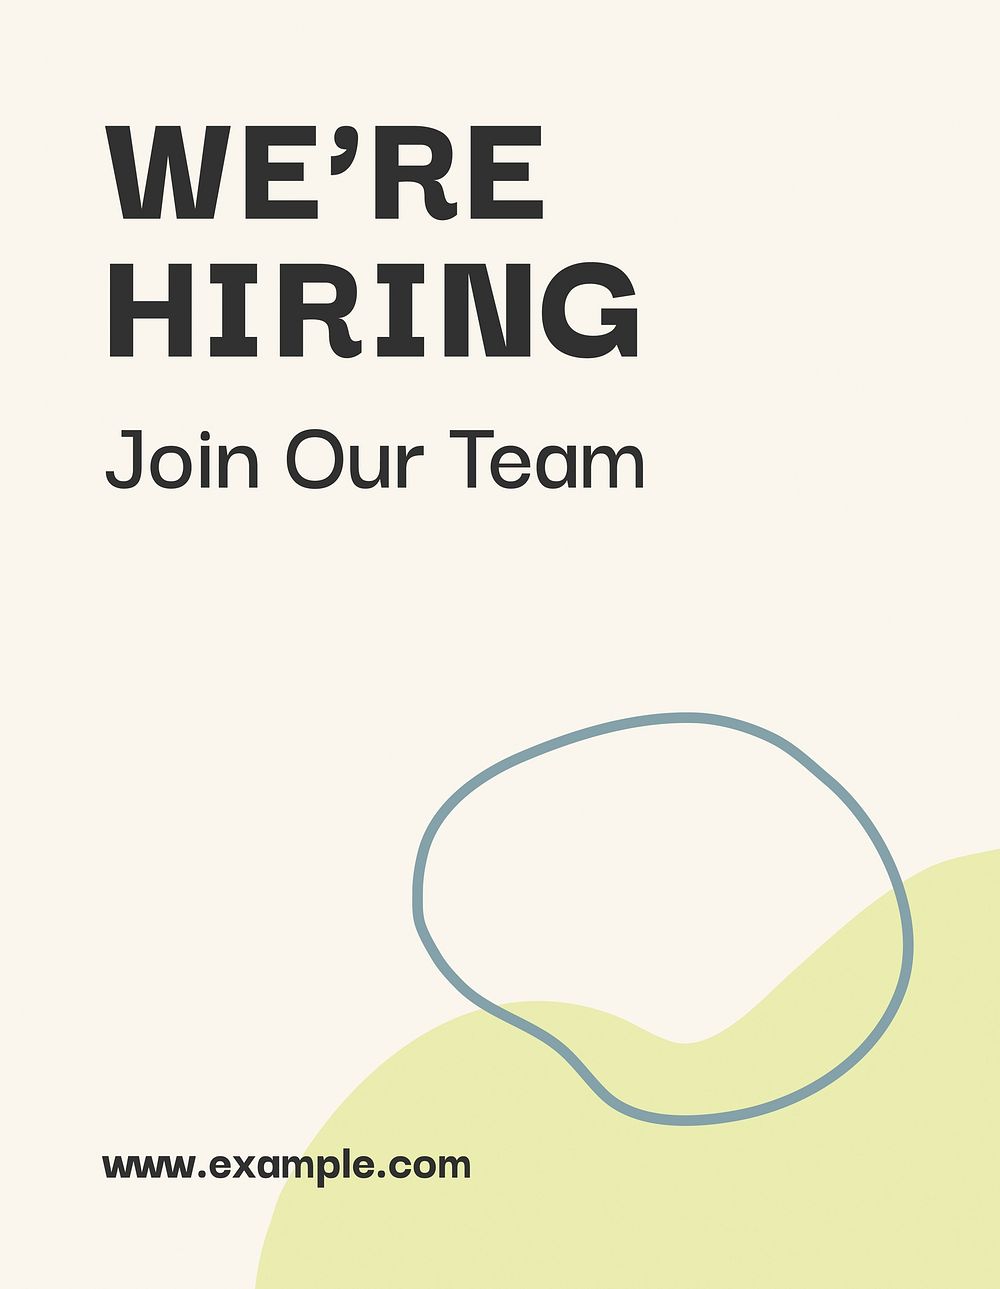 We're hiring template, job recruitment, minimal design vector